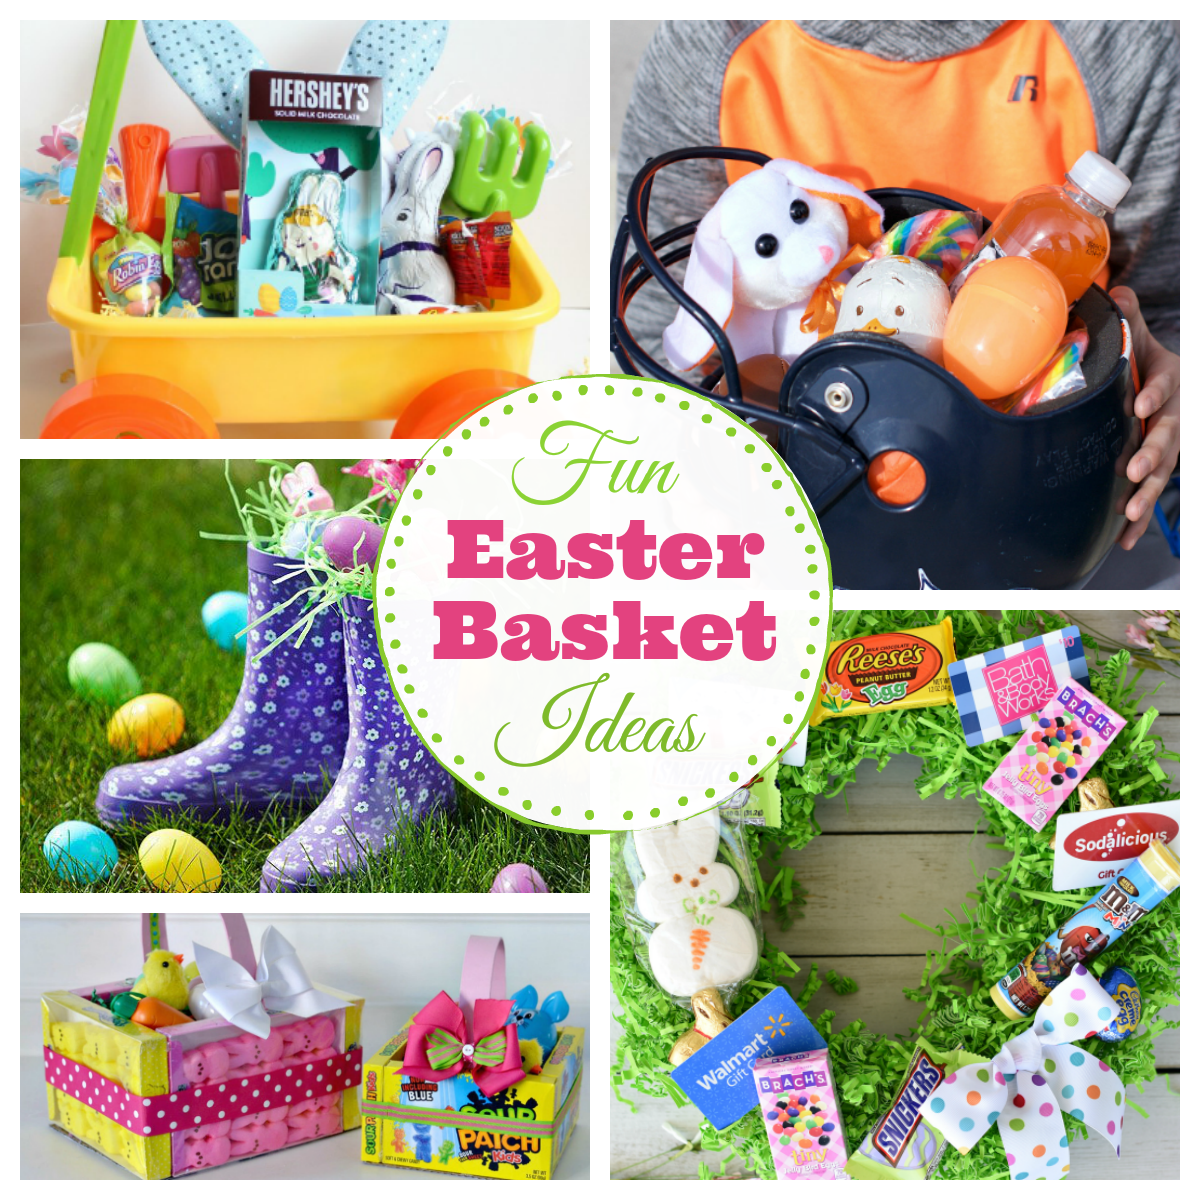 Fun Easter Basket Ideas